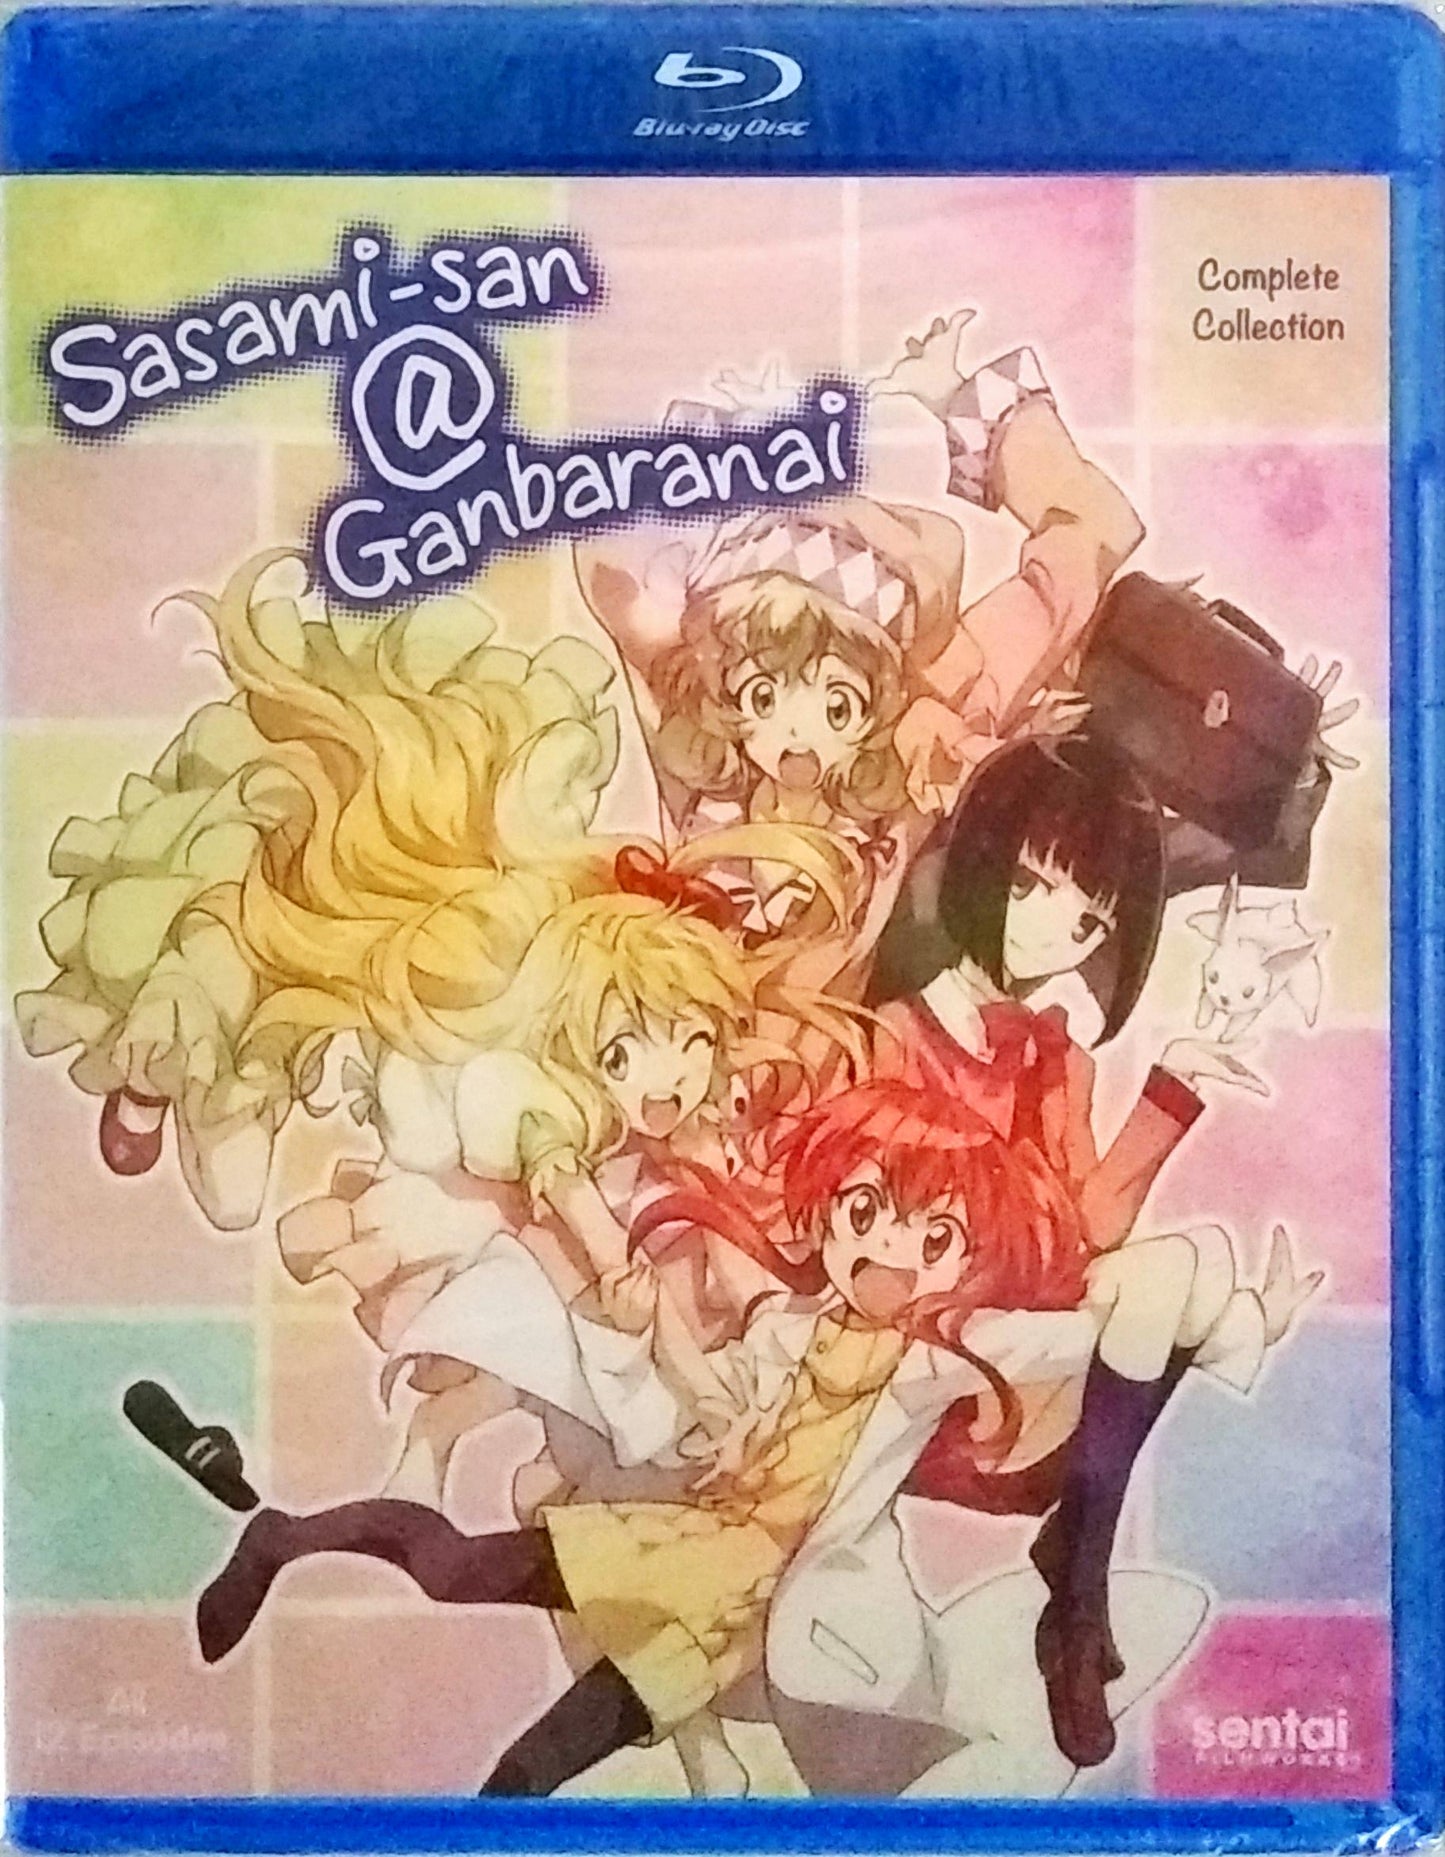 Sasami-San@Ganbaranai Blu-ray Complete Collection Sealed